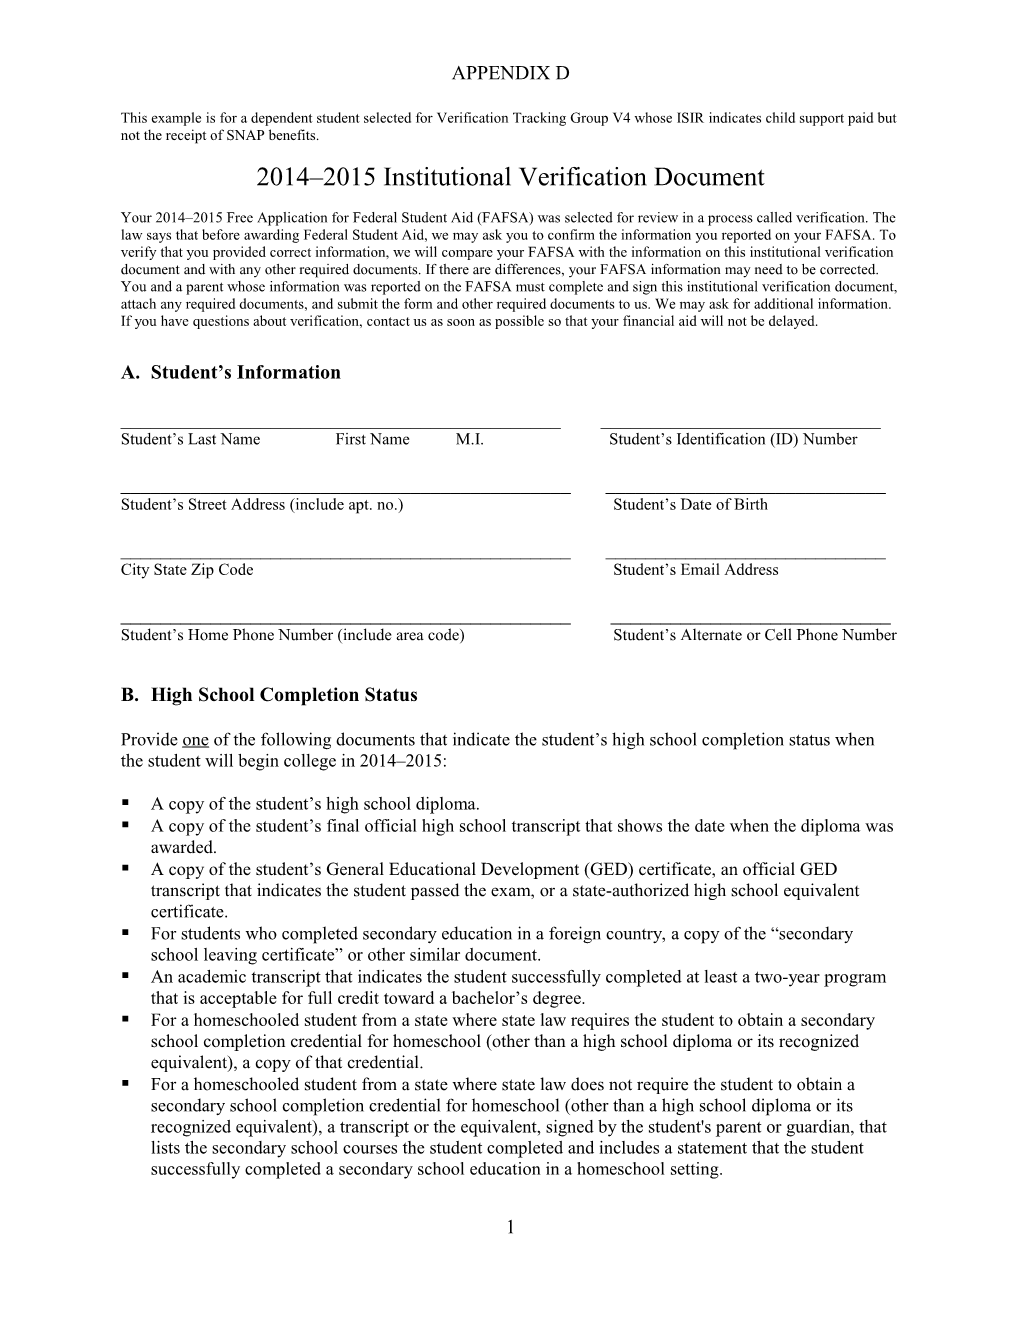 2014 2015Institutional Verification Document